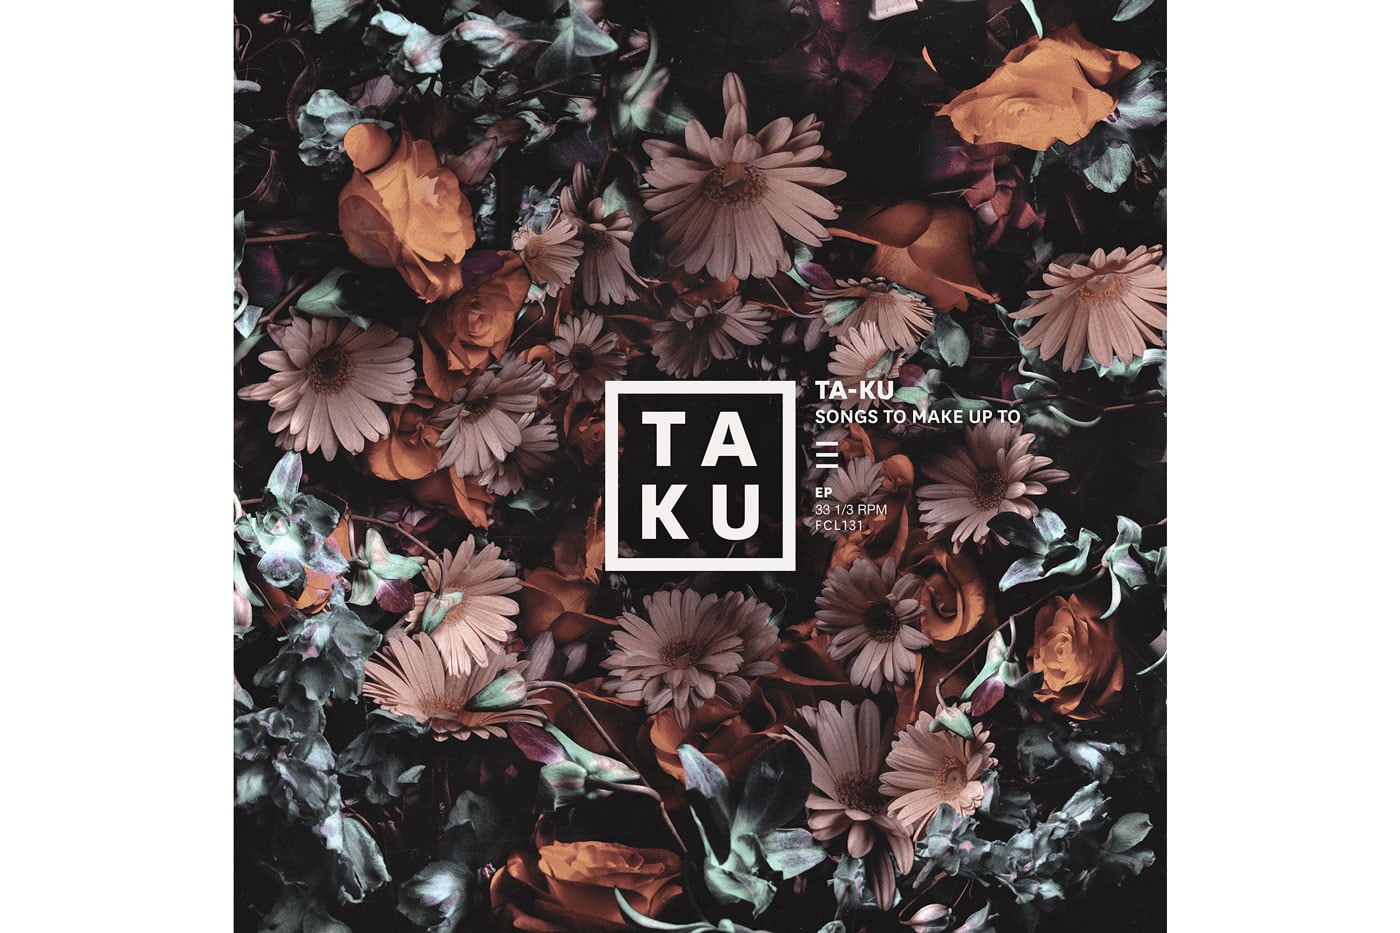 Ta-ku Interviews Ta-ku for His 'Songs To Make Up To' EP